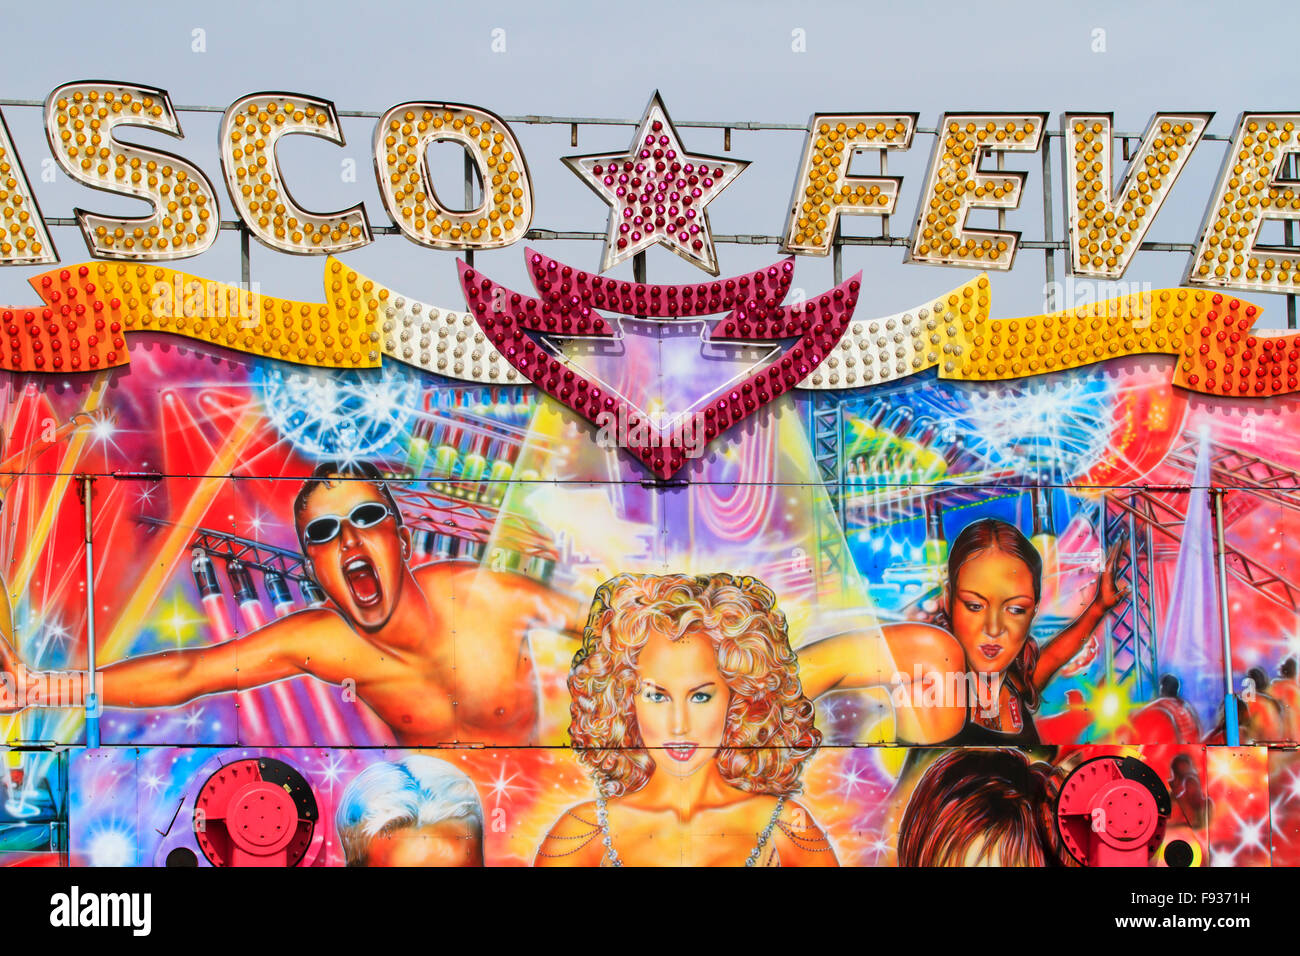 'Disco Fever' fête foraine ride. Banque D'Images